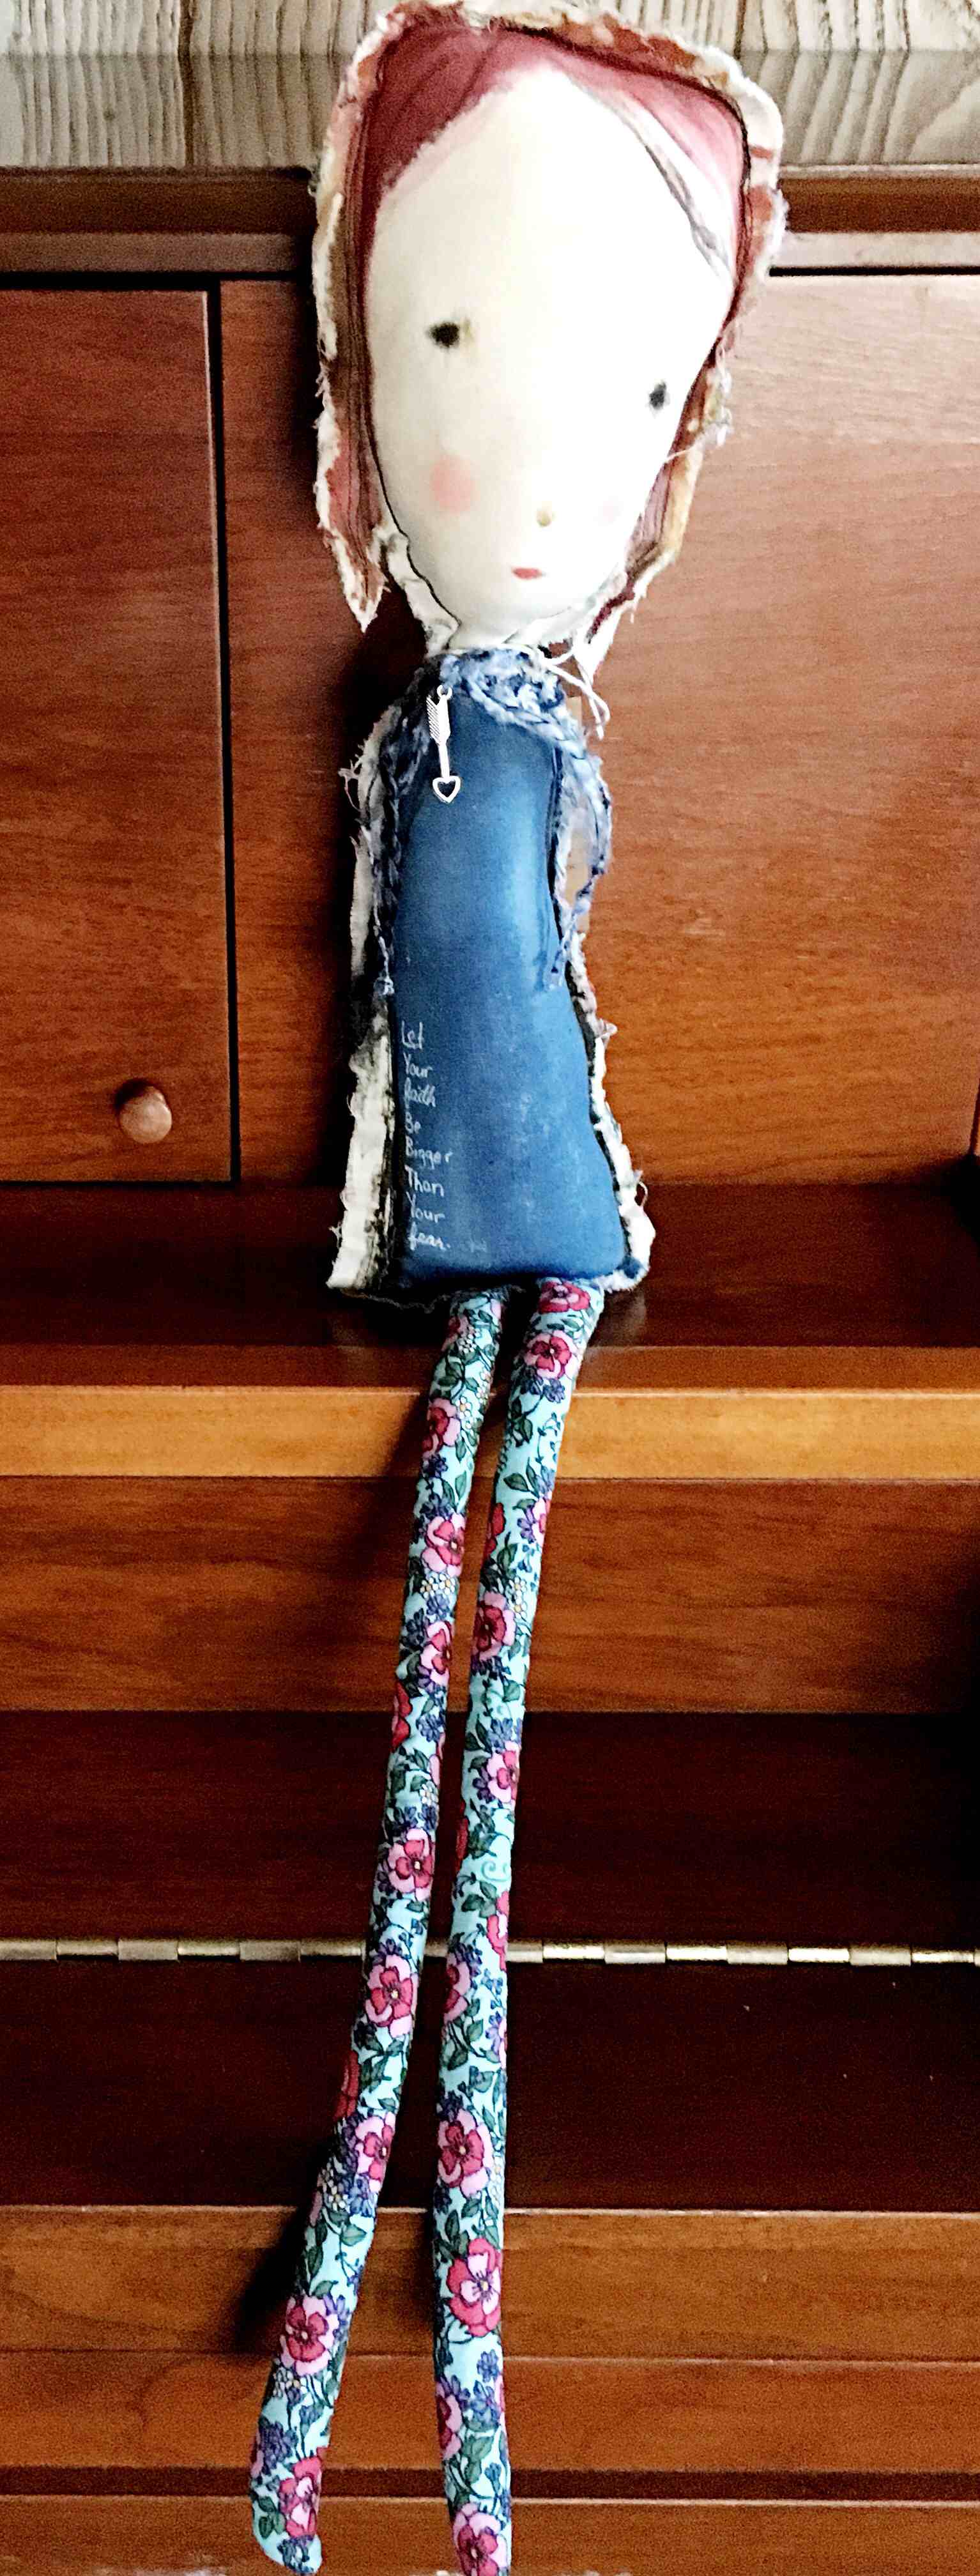 flannery handmade doll